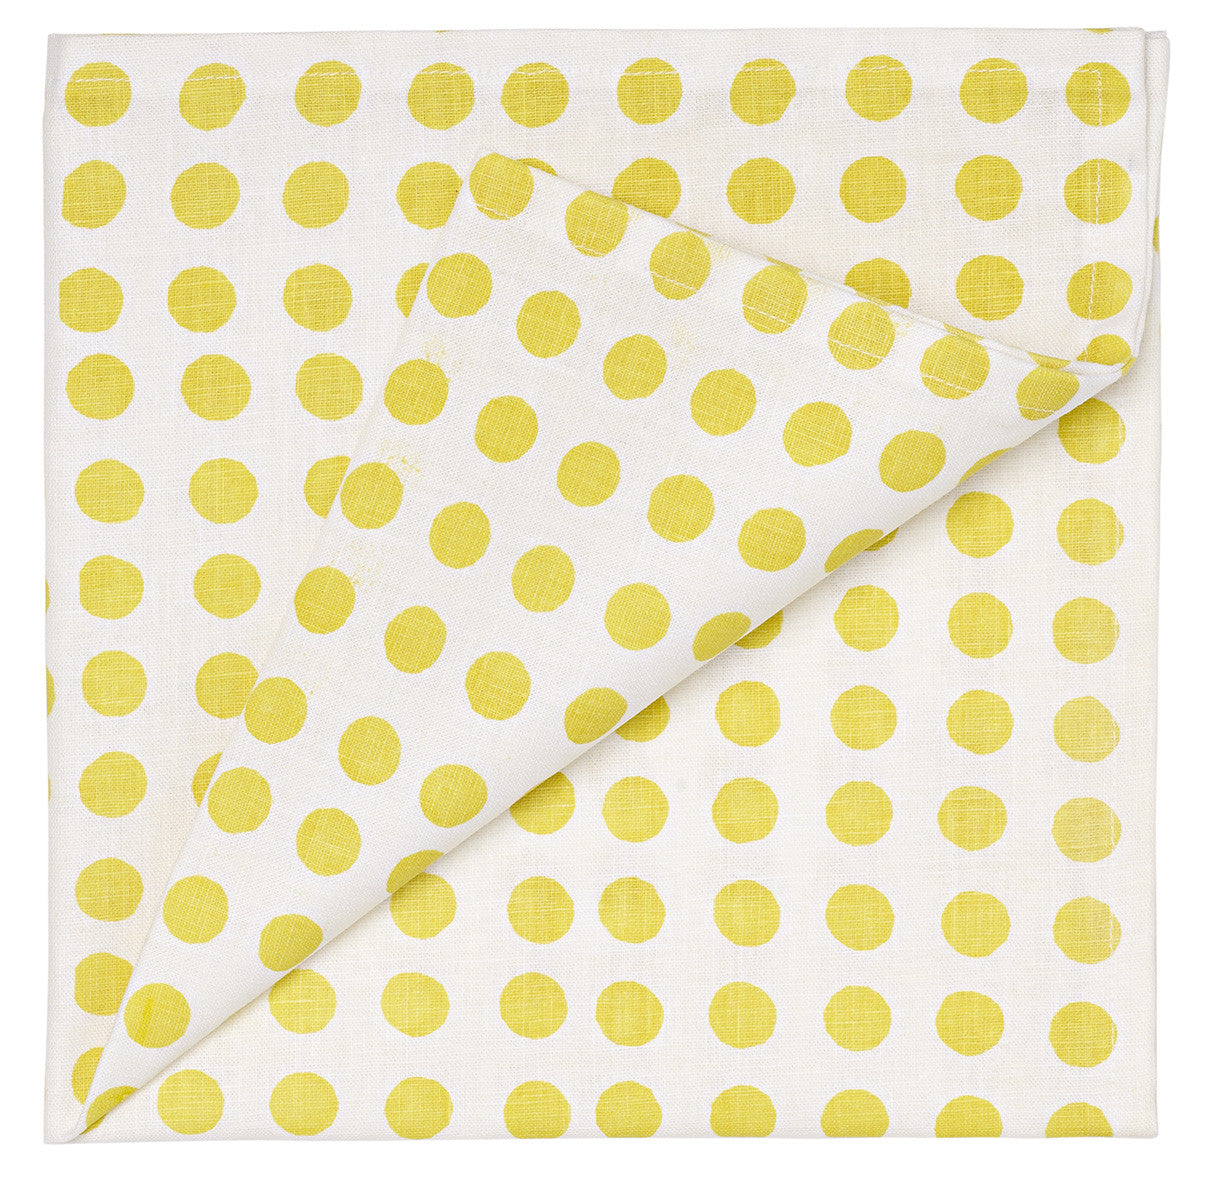 London Polka Dot Pattern Napkins in Bright Maize Yellow